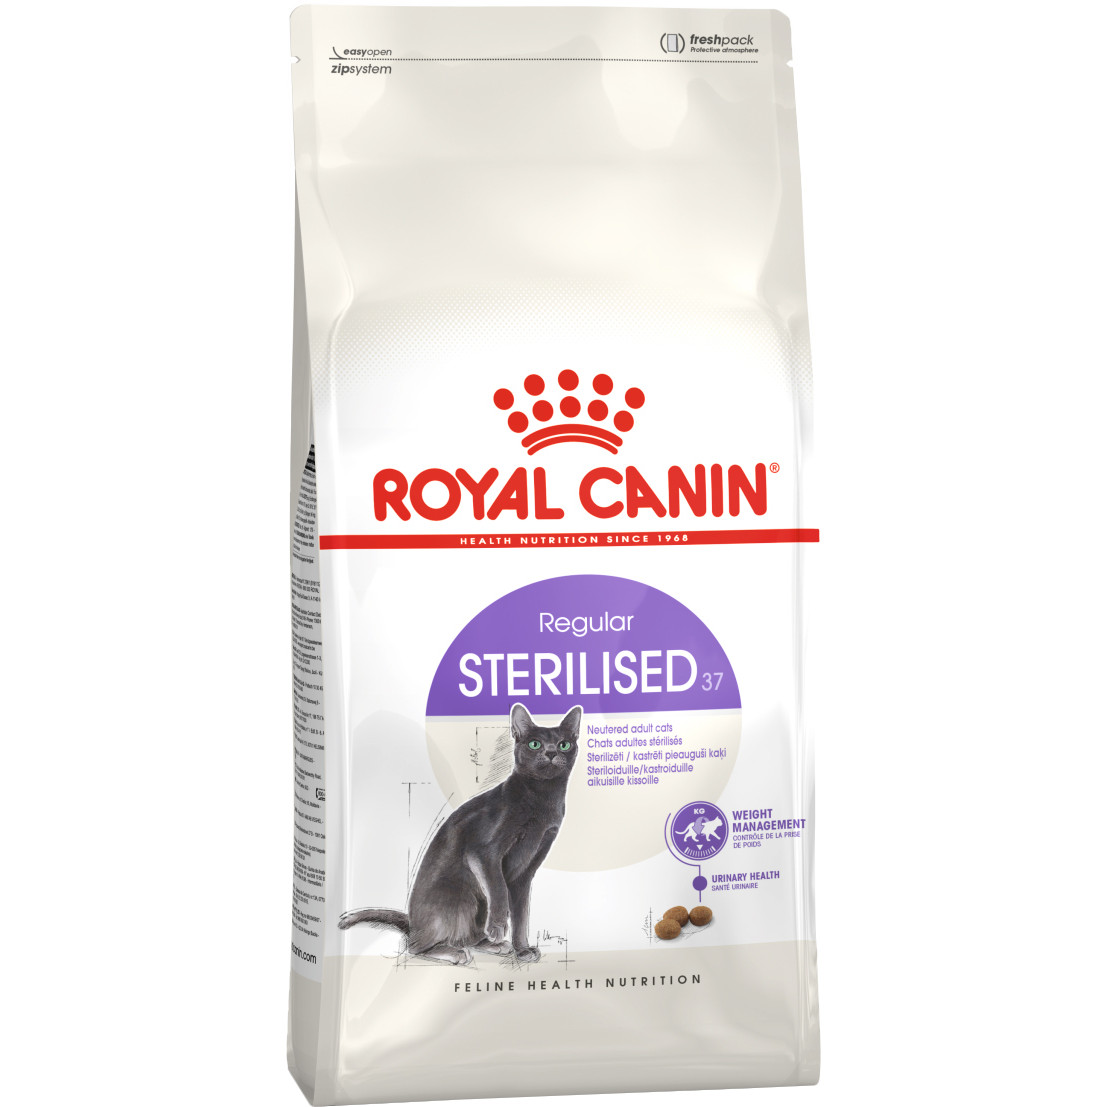 Royal Canin Sterilised 37 10 кг (2537100) - зображення 1